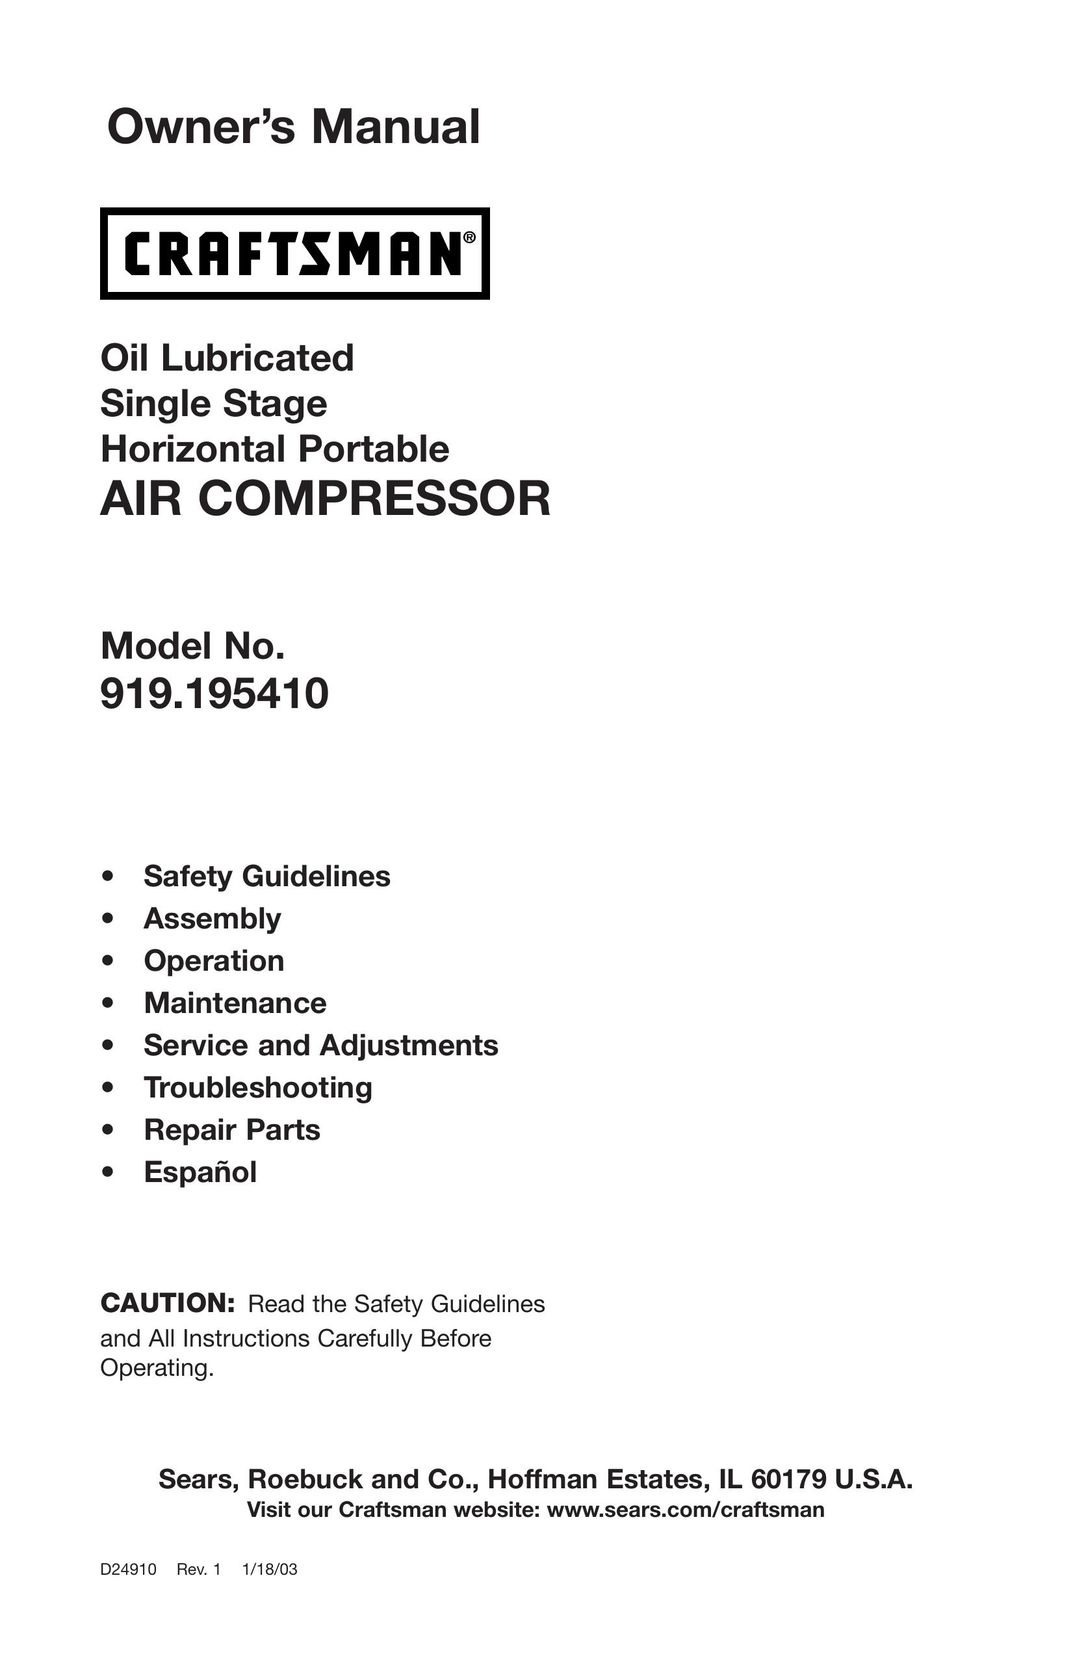 Craftsman 919.19541 Air Compressor User Manual